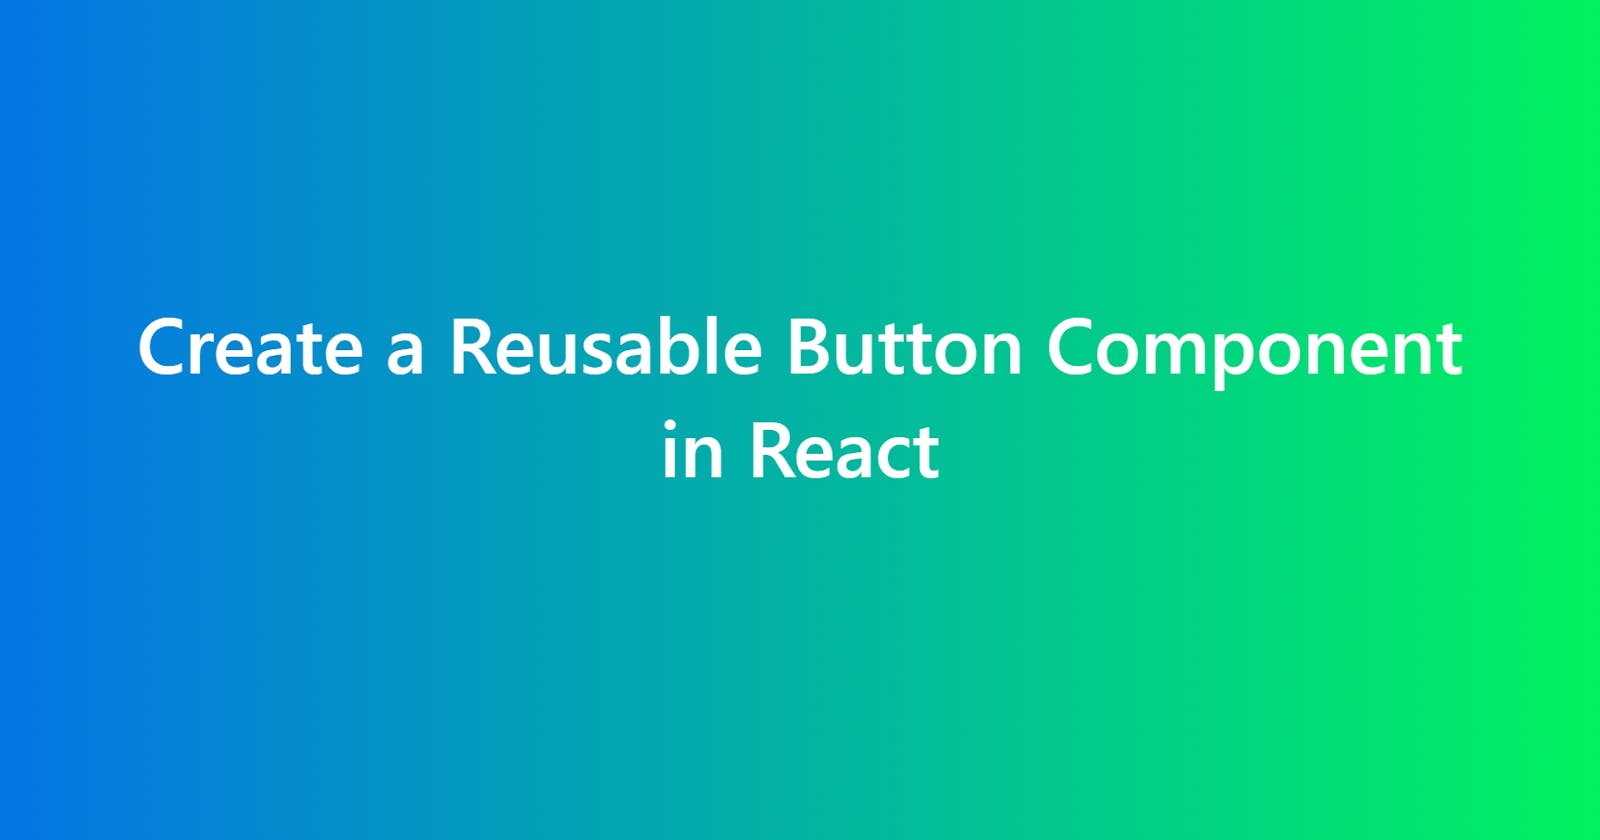 Create a Reusable Button Component in React